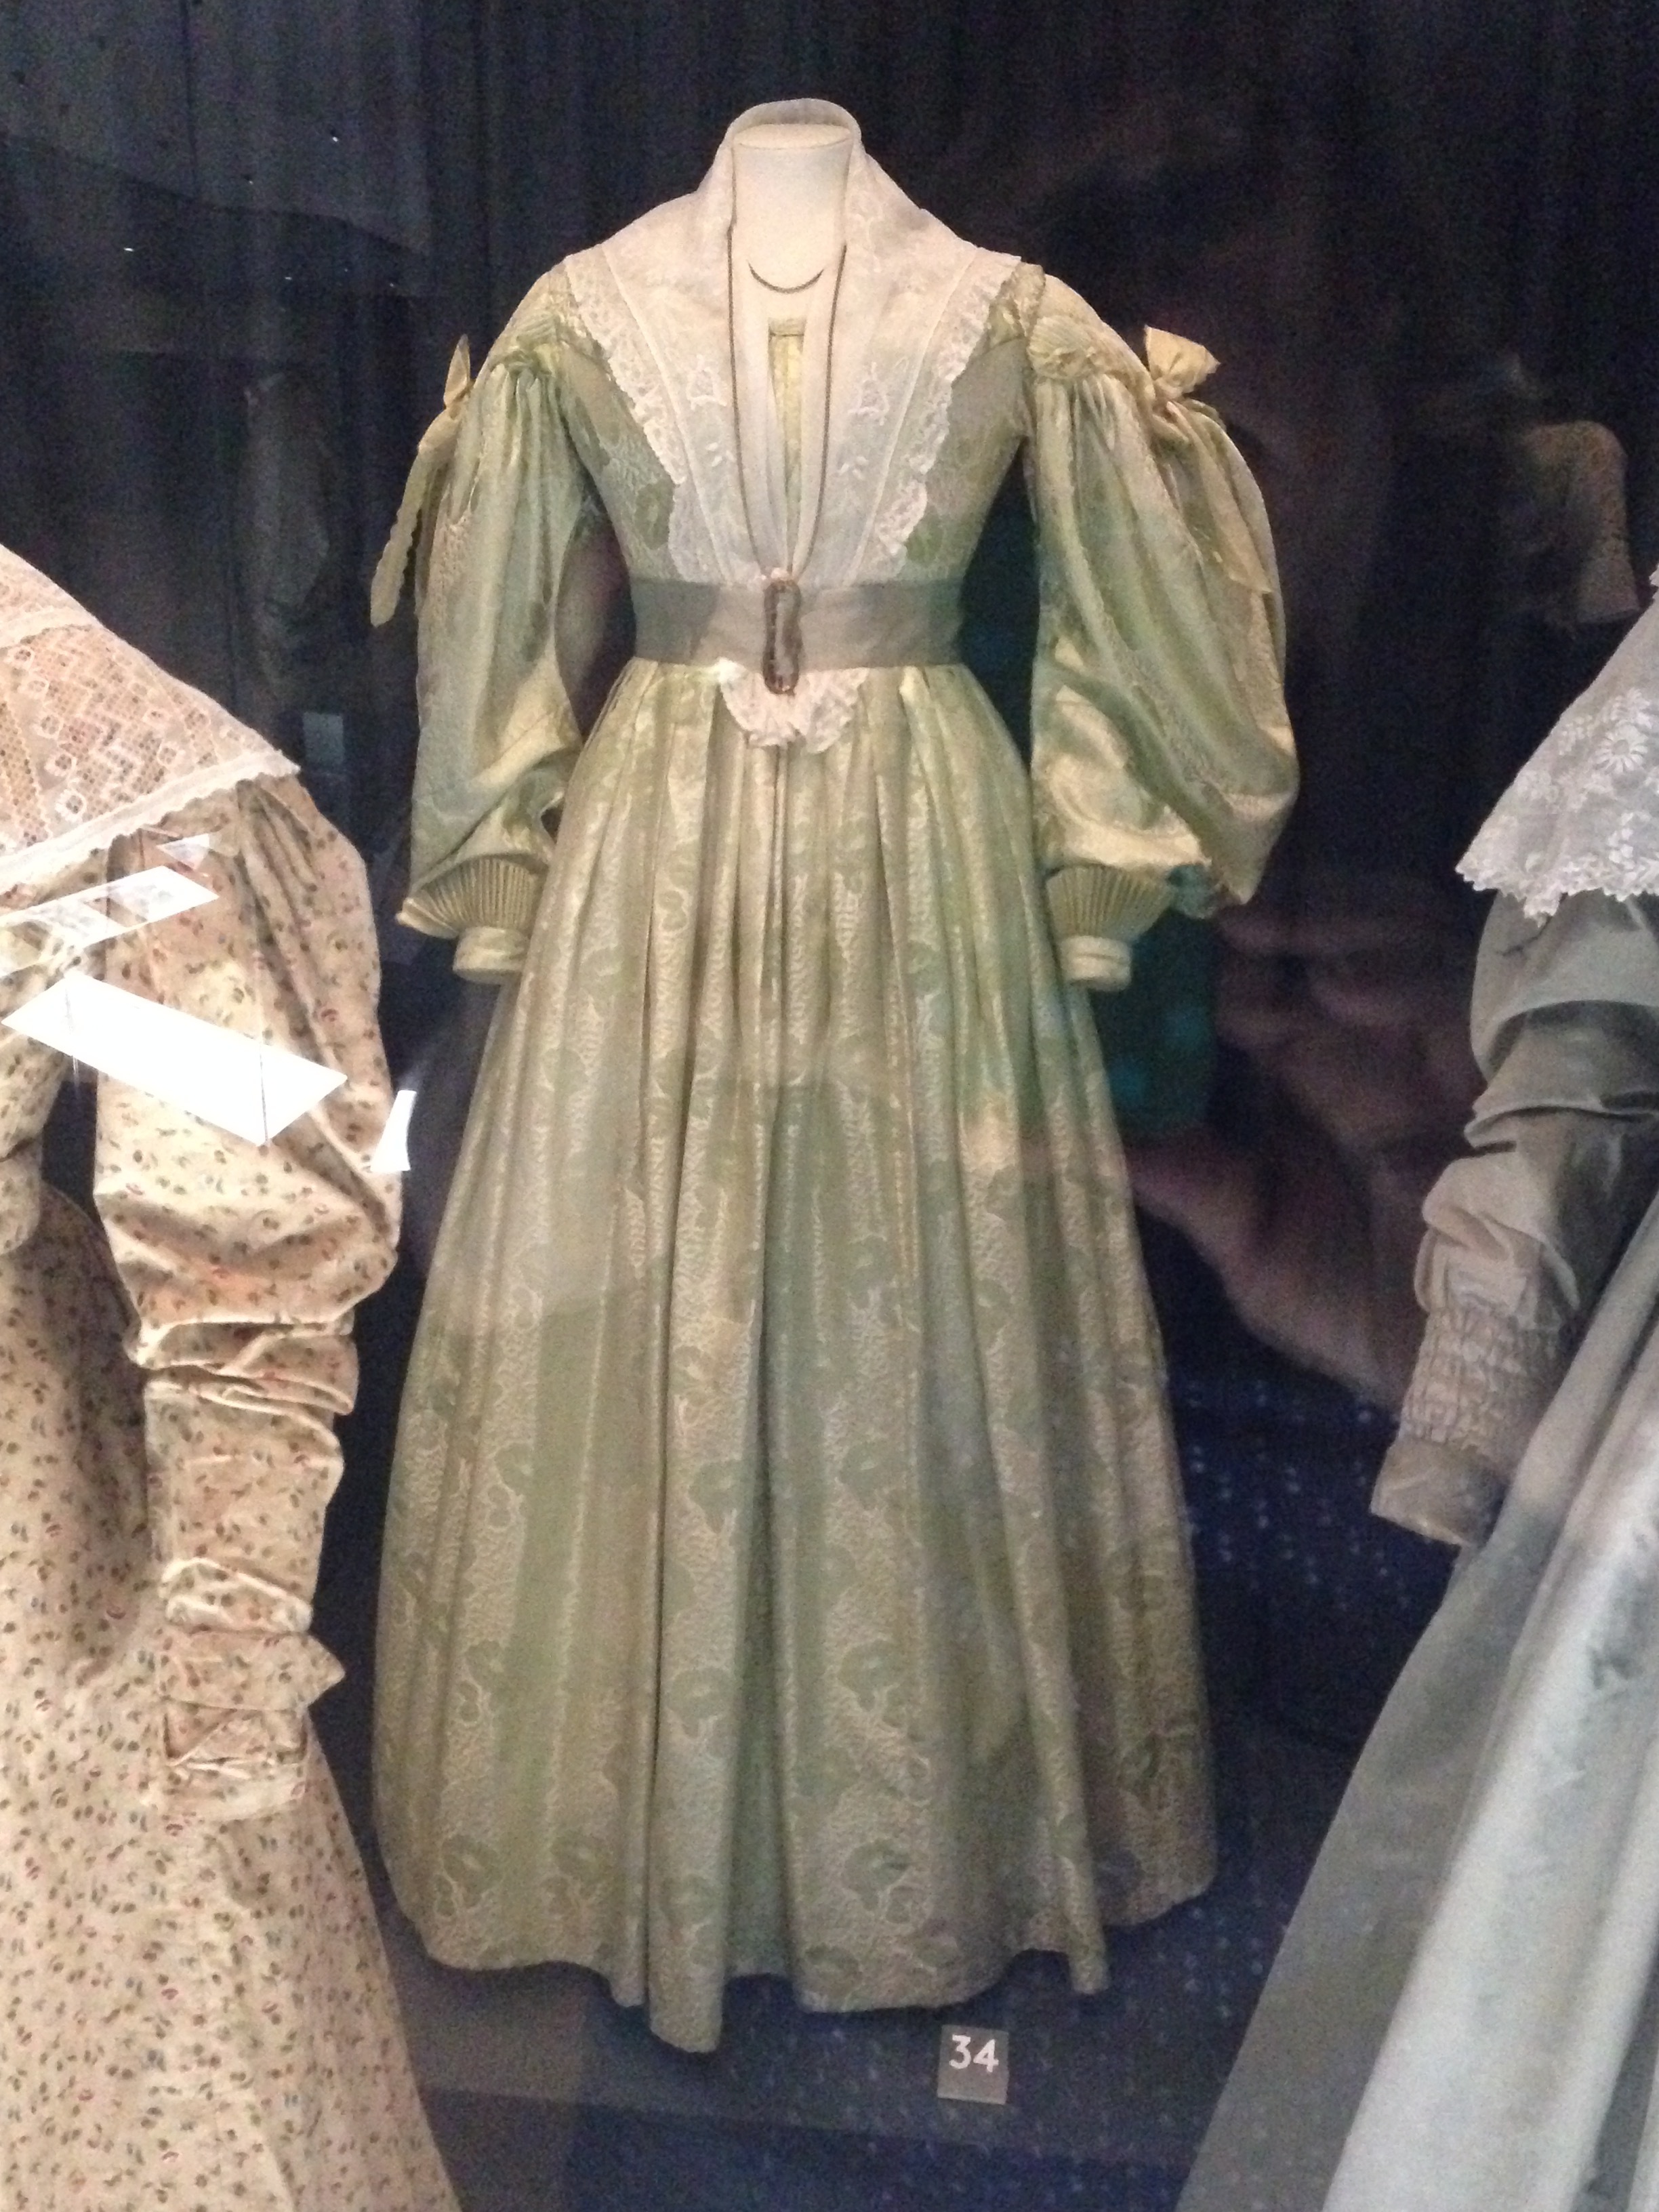  A 19th-century dress (post-regency, not sure when). 